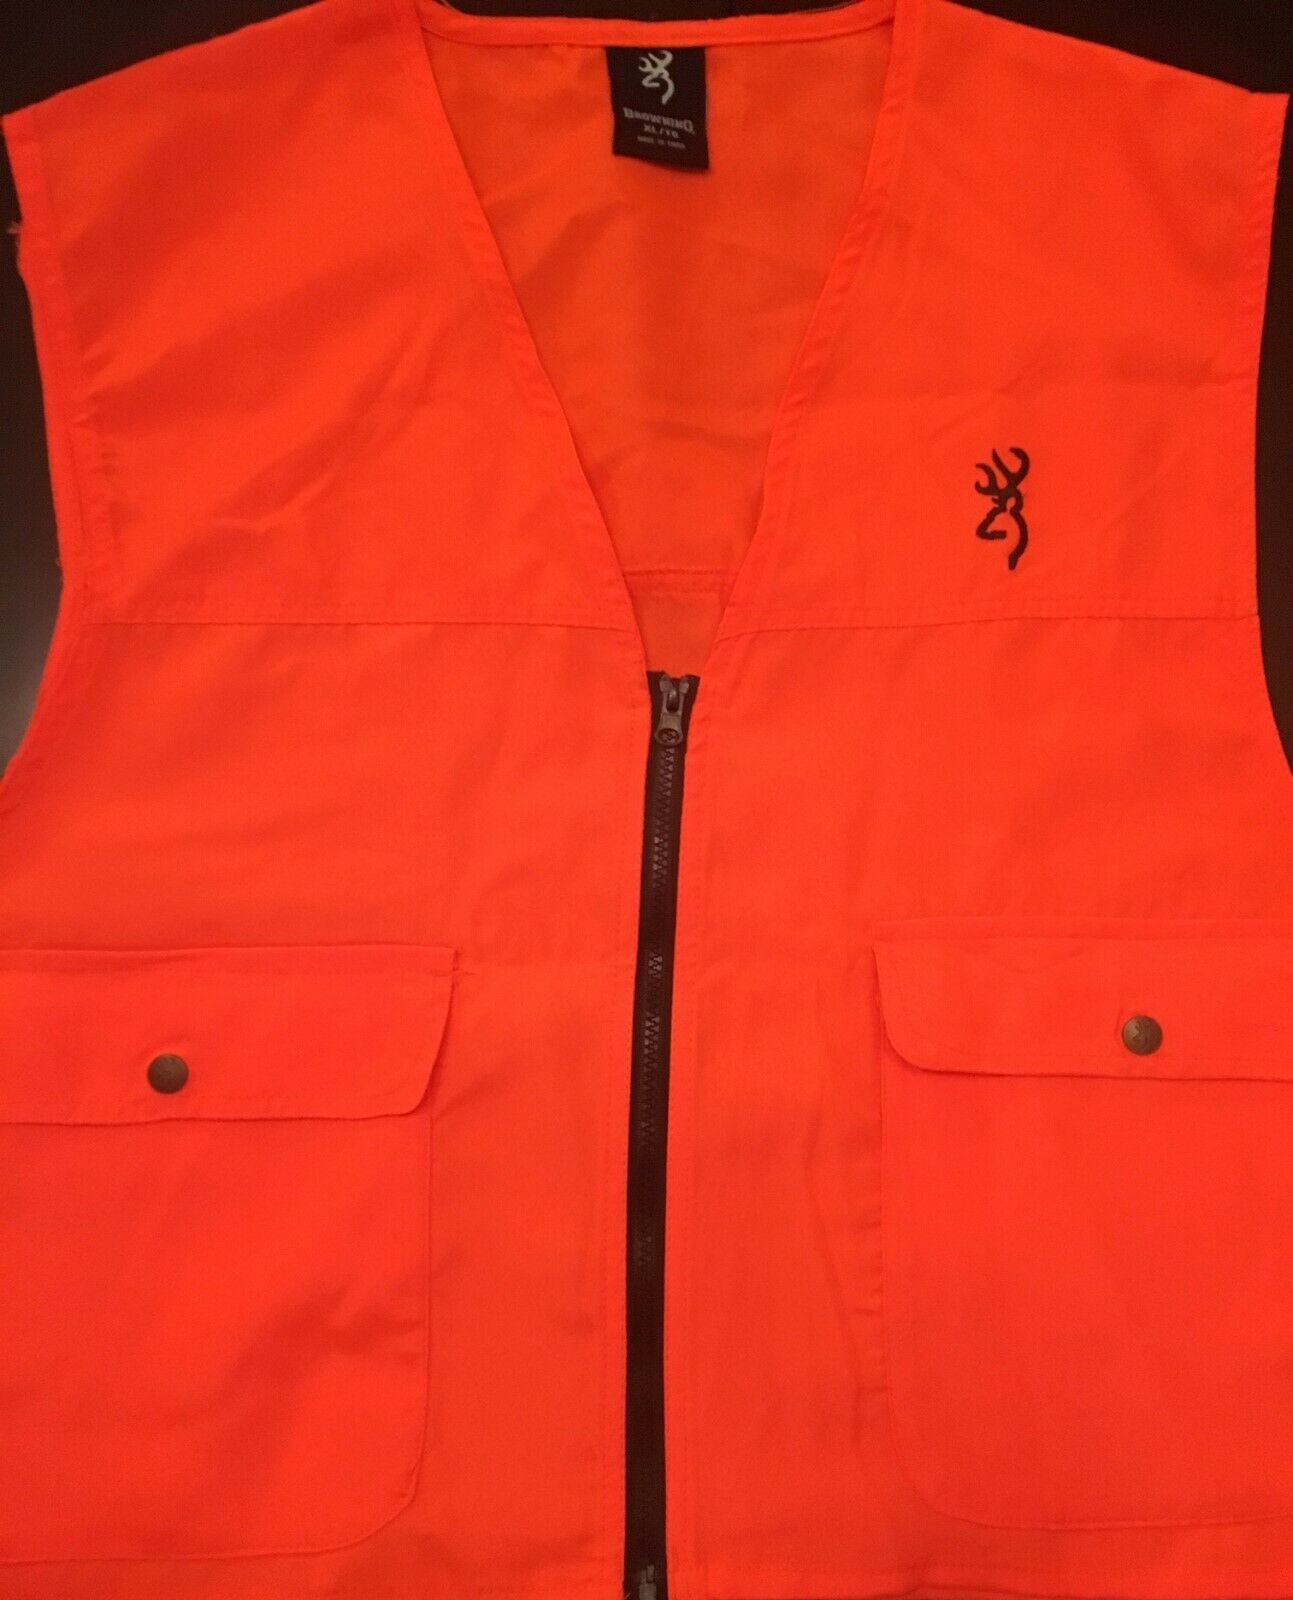 Browning Hunting Safety Vest For Adult - Blaze Orange - Sizes In M, L, Xl